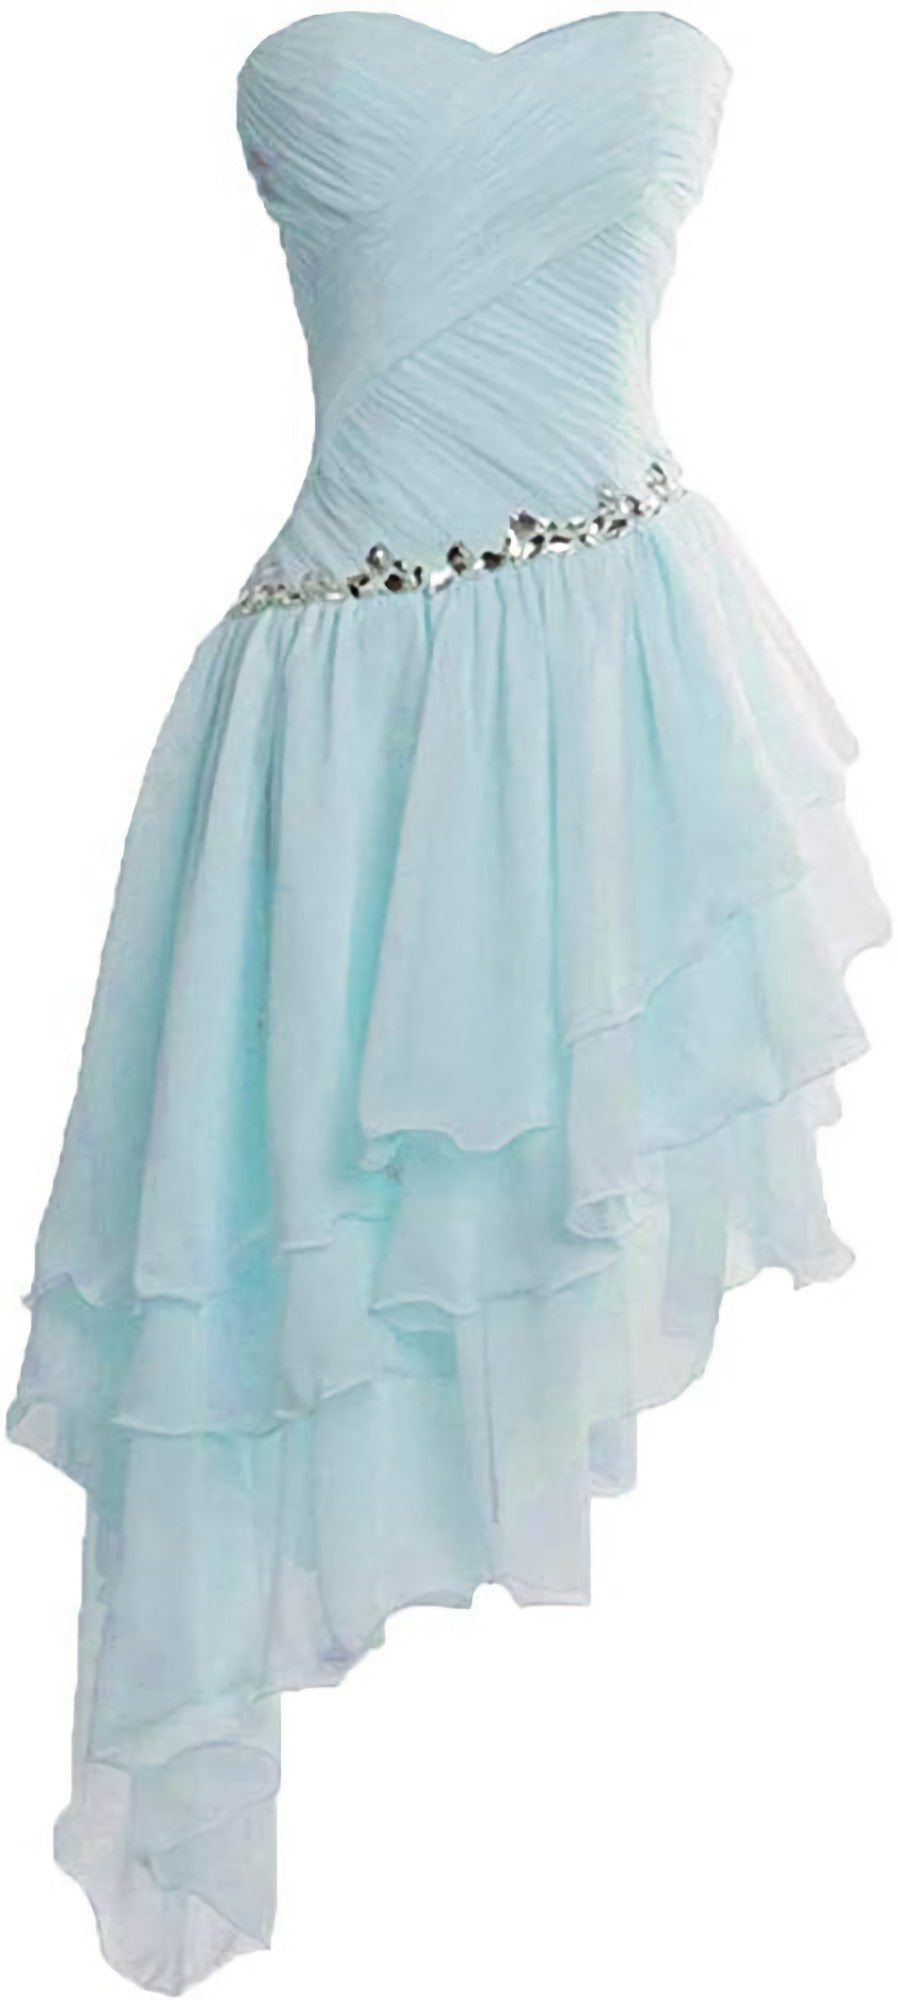 Bridesmaid Dress Dusty Rose, Homecoming Dresses, High Low Chiffon Bridemaid Dresses, Short